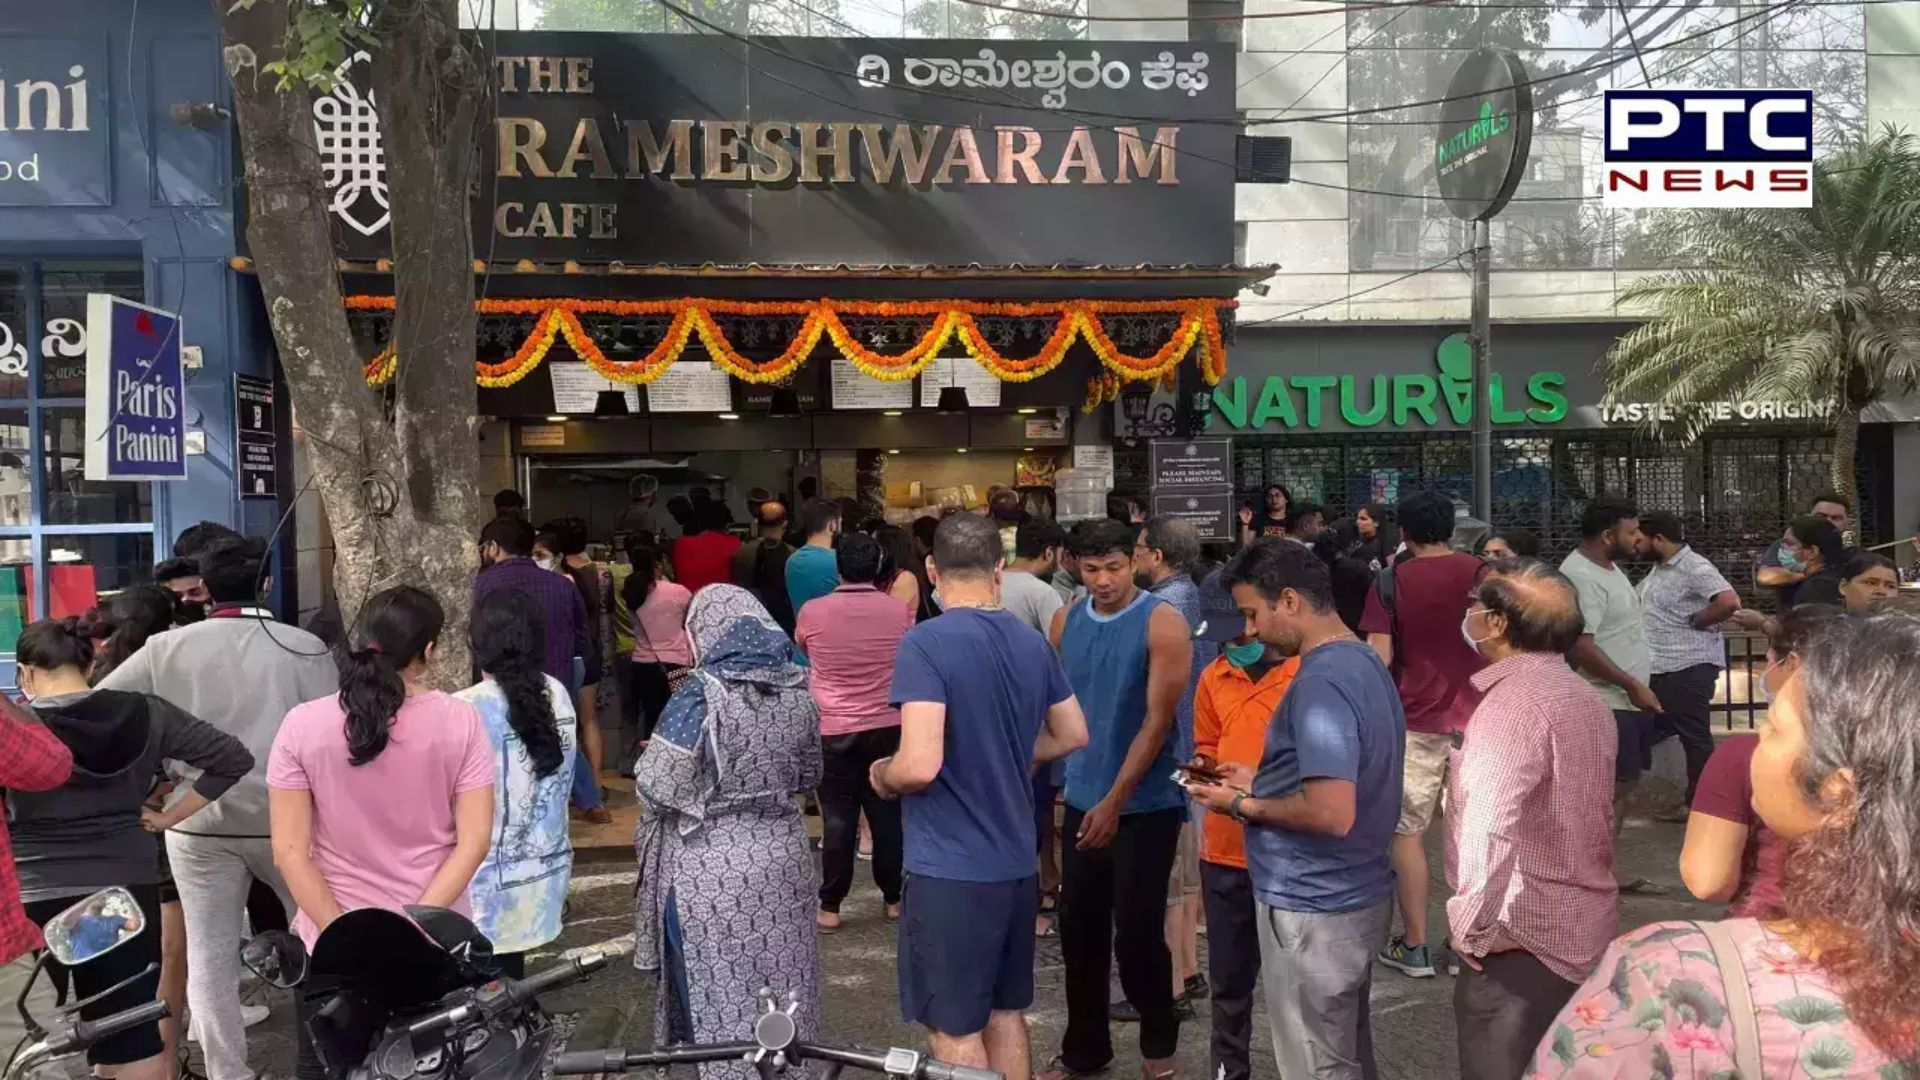 Rameshwaram Cafe blast case: NIA arrests key conspirator after multiple raids